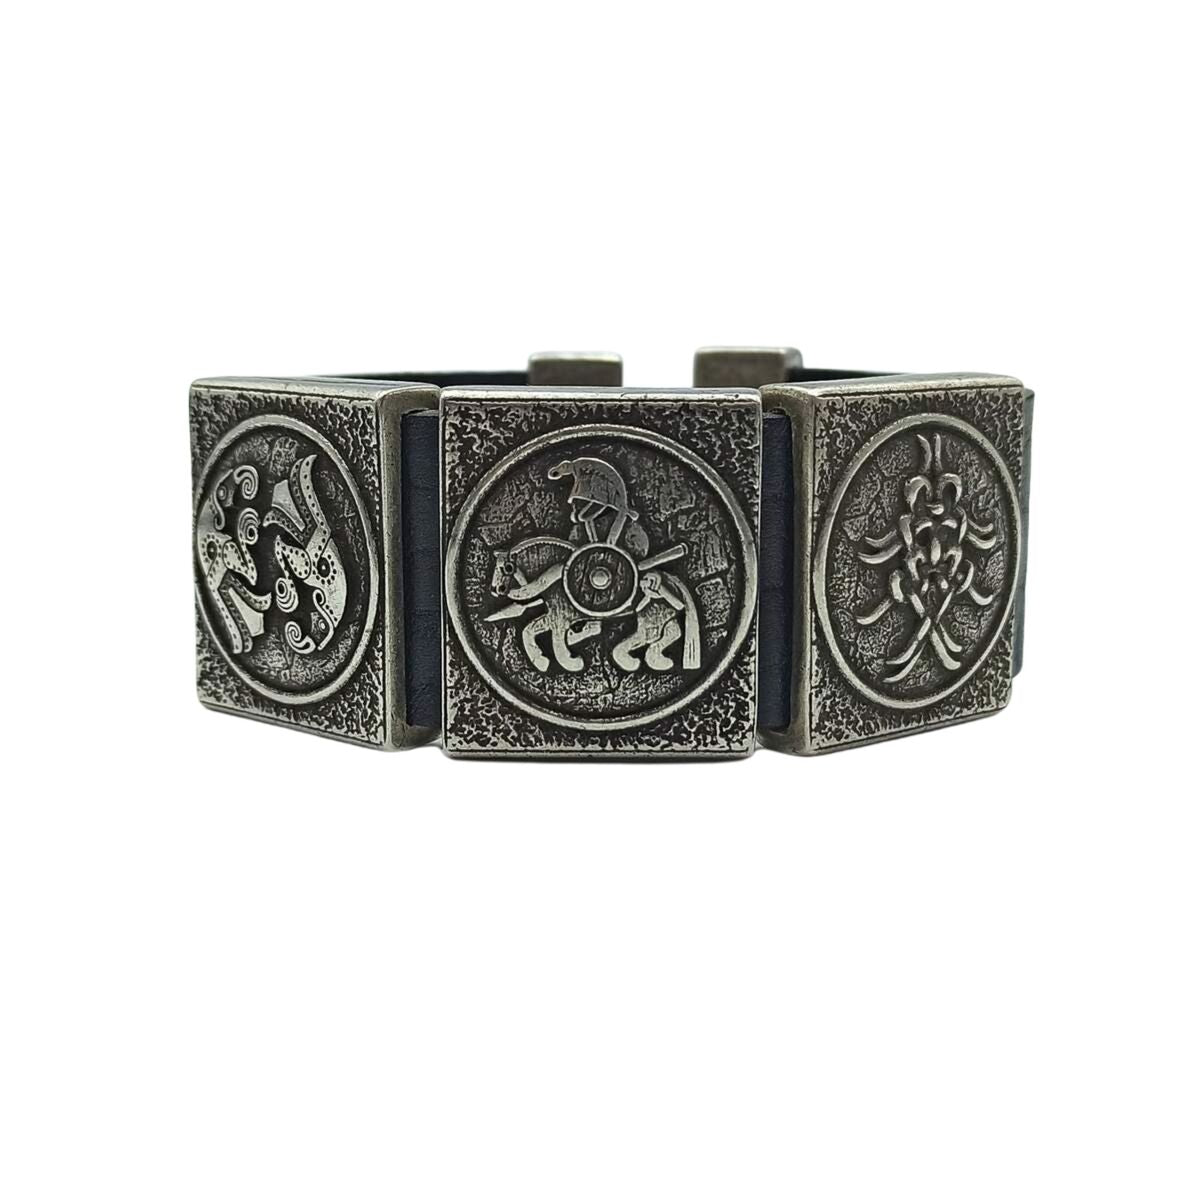 Odin leather wrist cuff bracelet